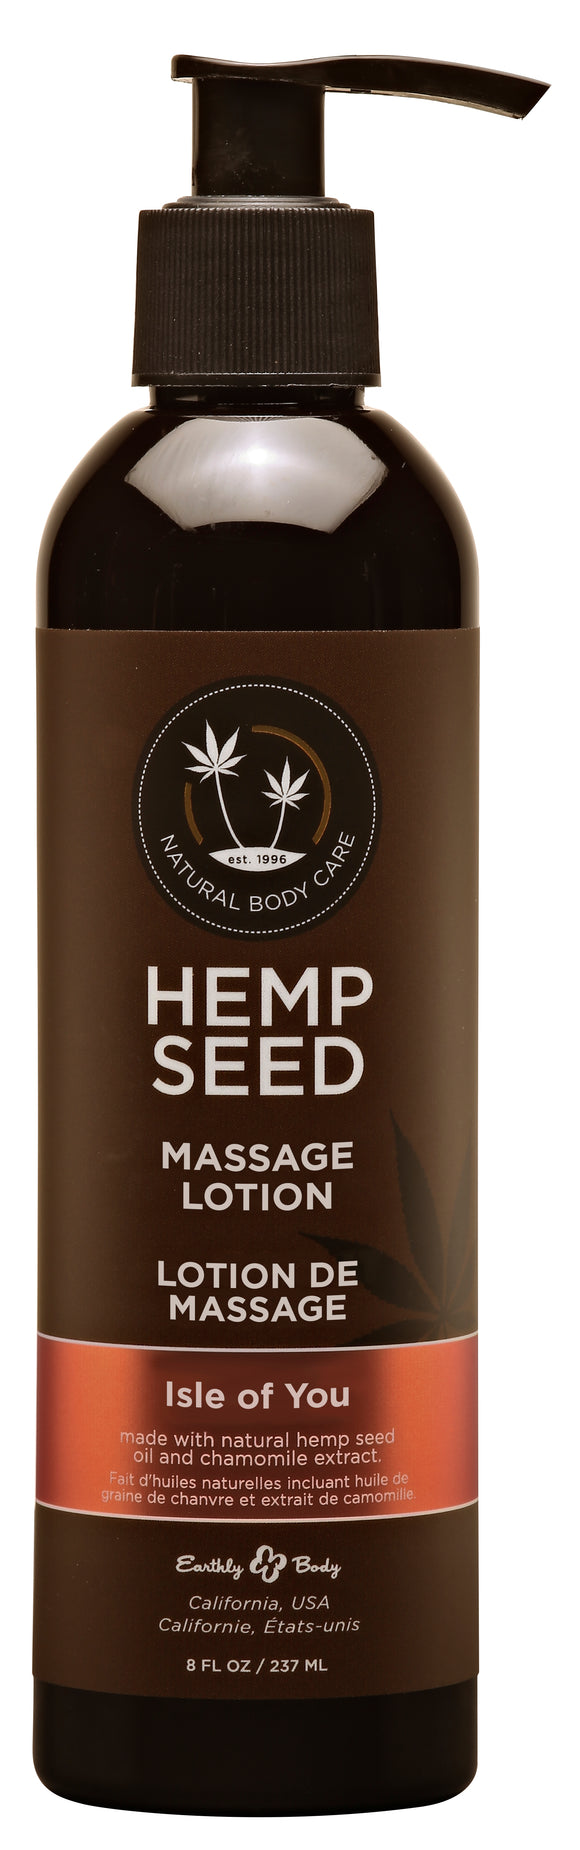 Hemp Seed Massage Lotion - Isle of You - 8 Fl. Oz. / 237ml EB-ML052